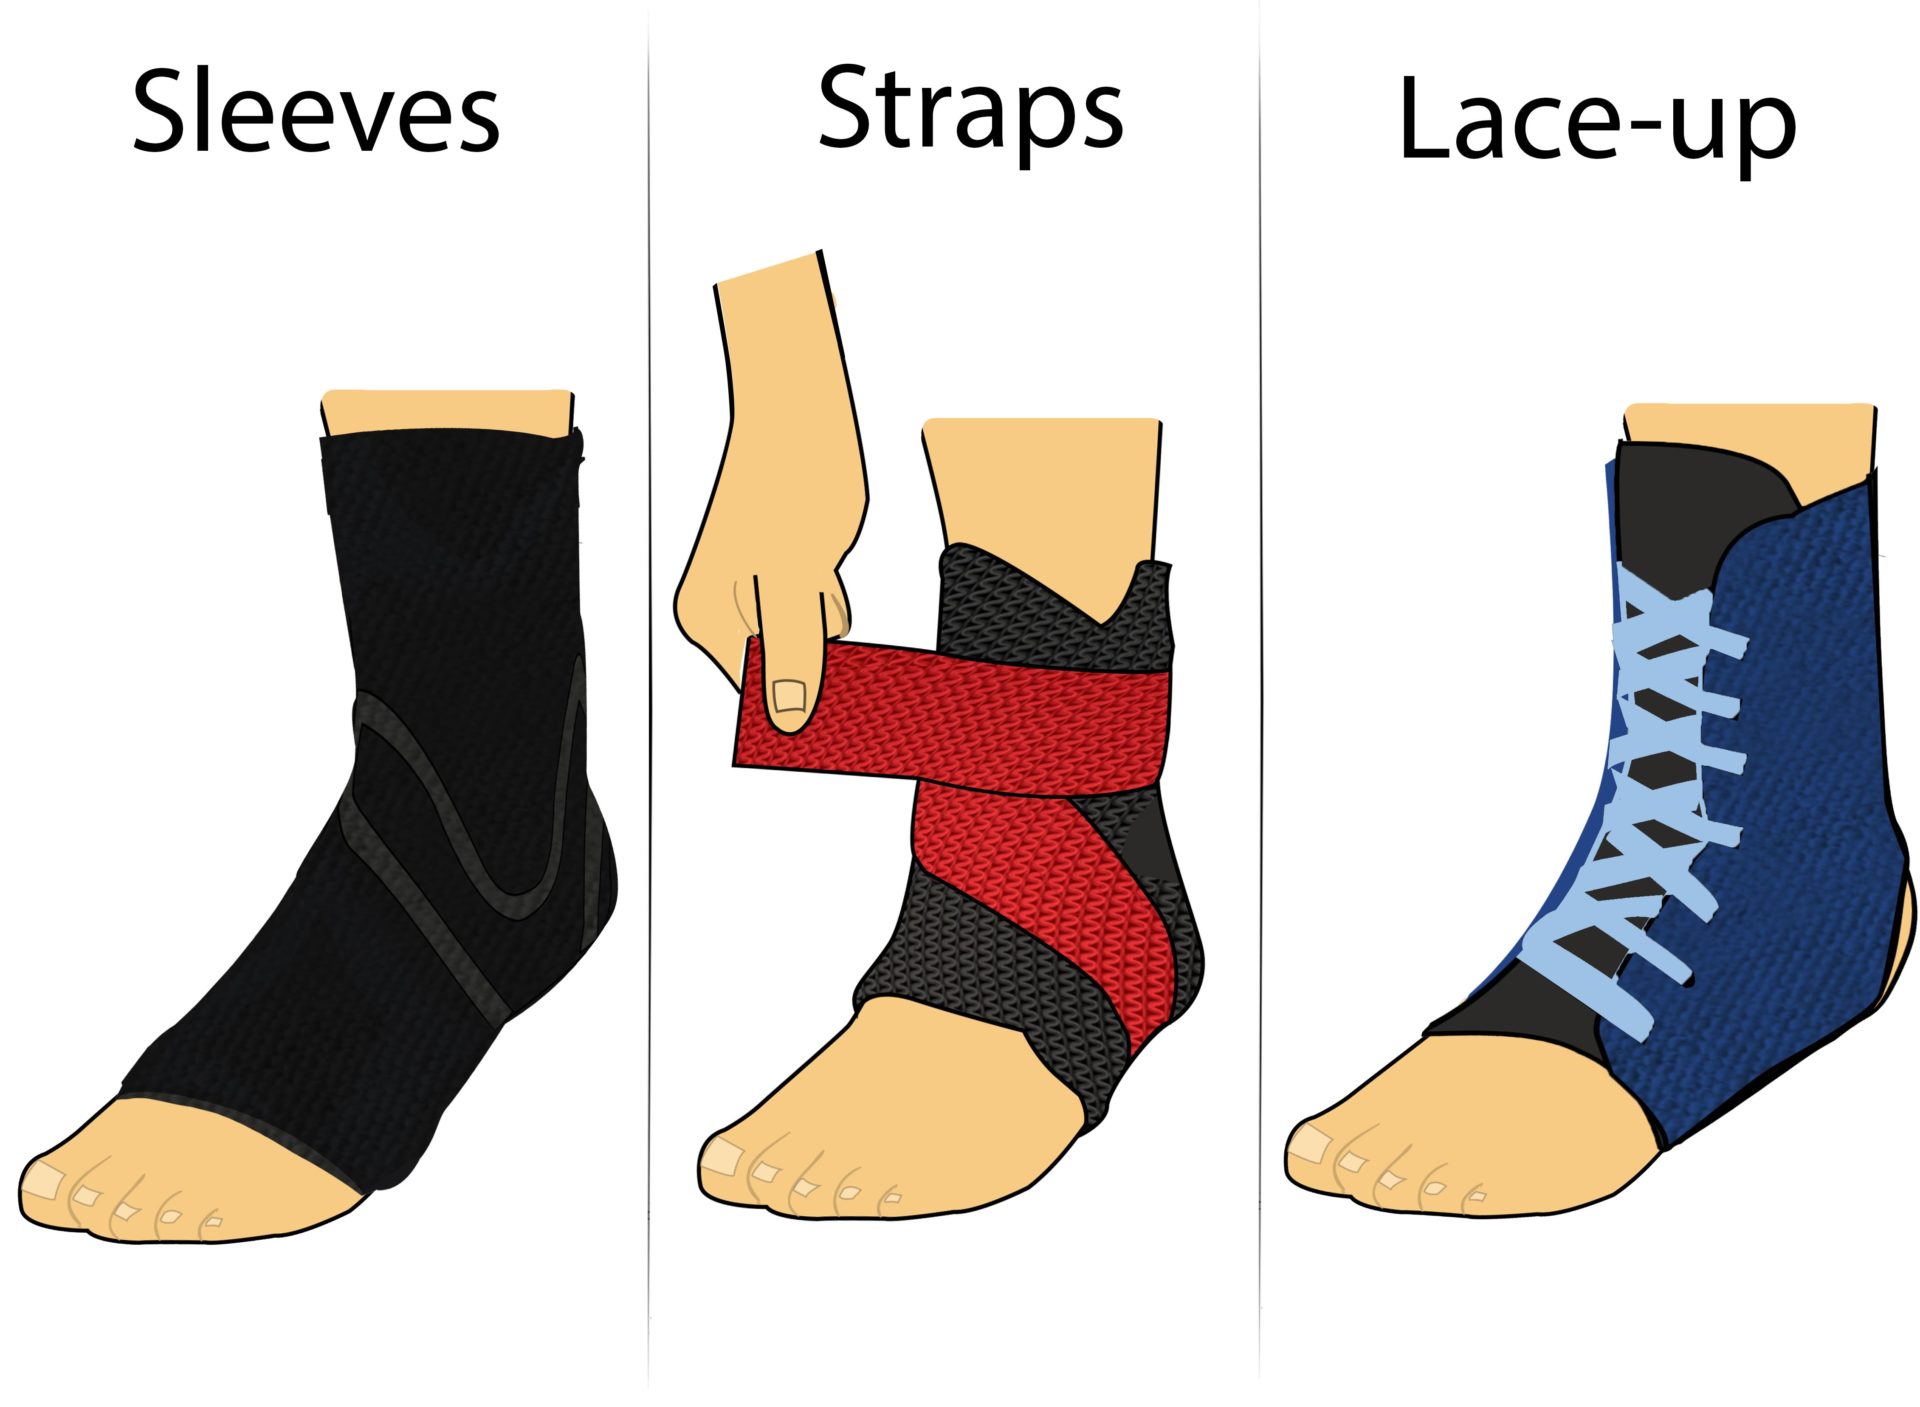 Sleeves vs. Straps vs. Lace-ups